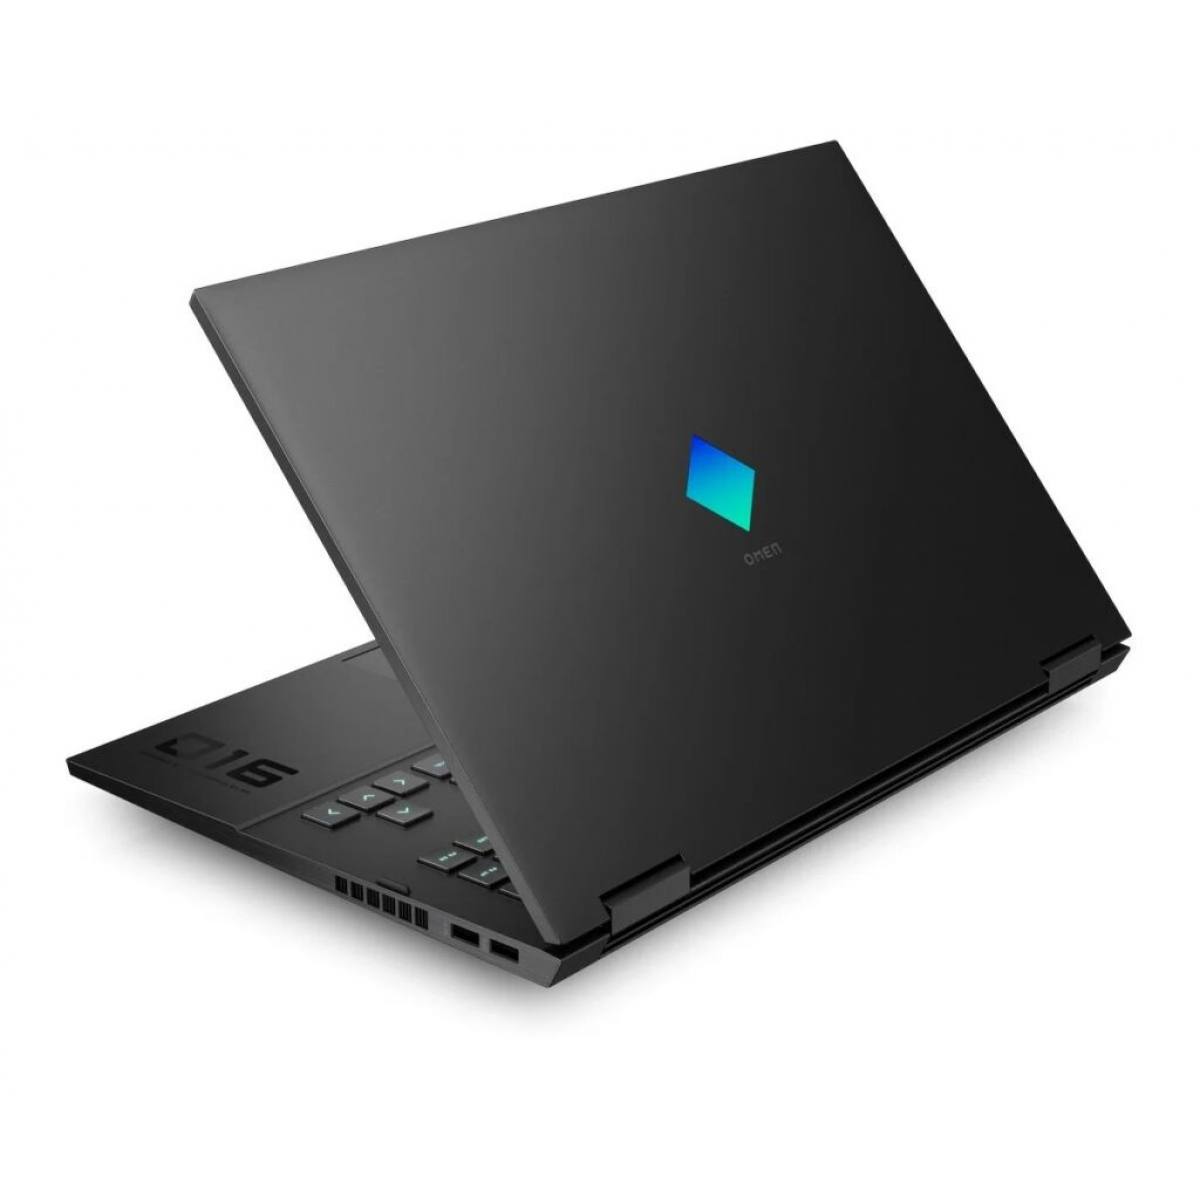 Laptop HP Gaming OMEN 16-b0123TX ( i7 11800H/32GB RAM/512GB SSD )